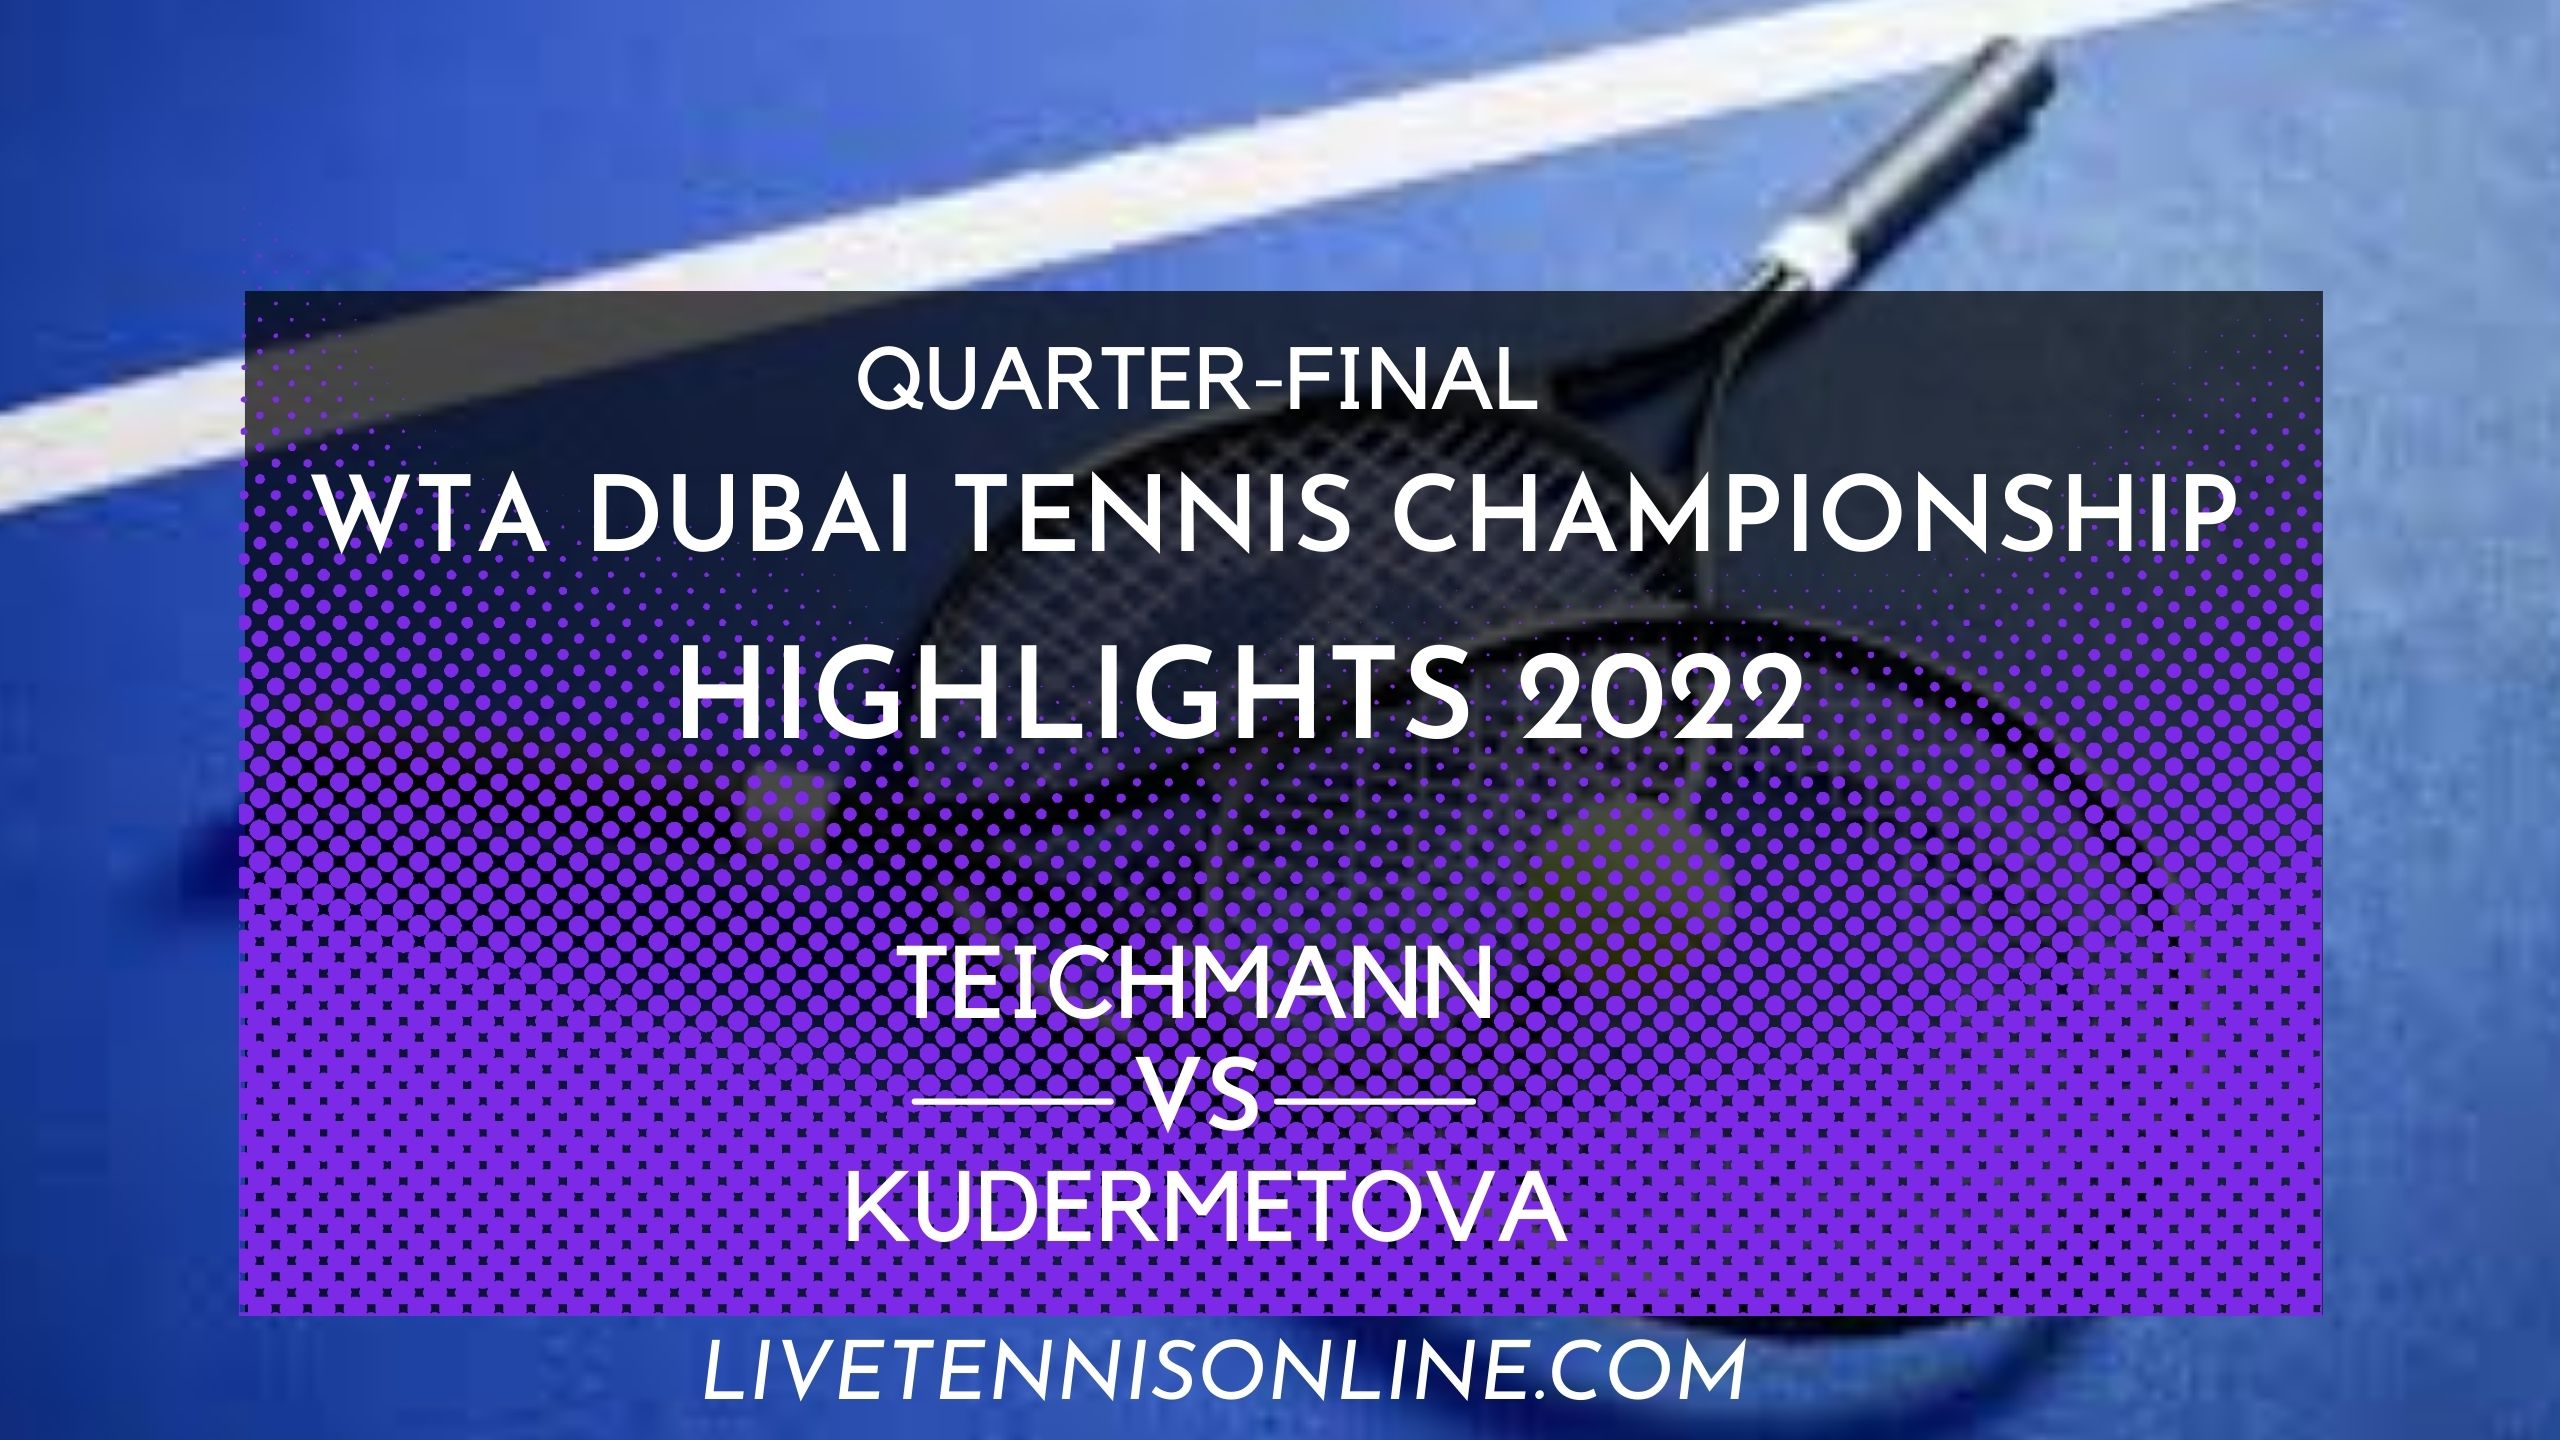 Teichmann Vs Kudermetova QF Highlights 2022 Dubai Tennis